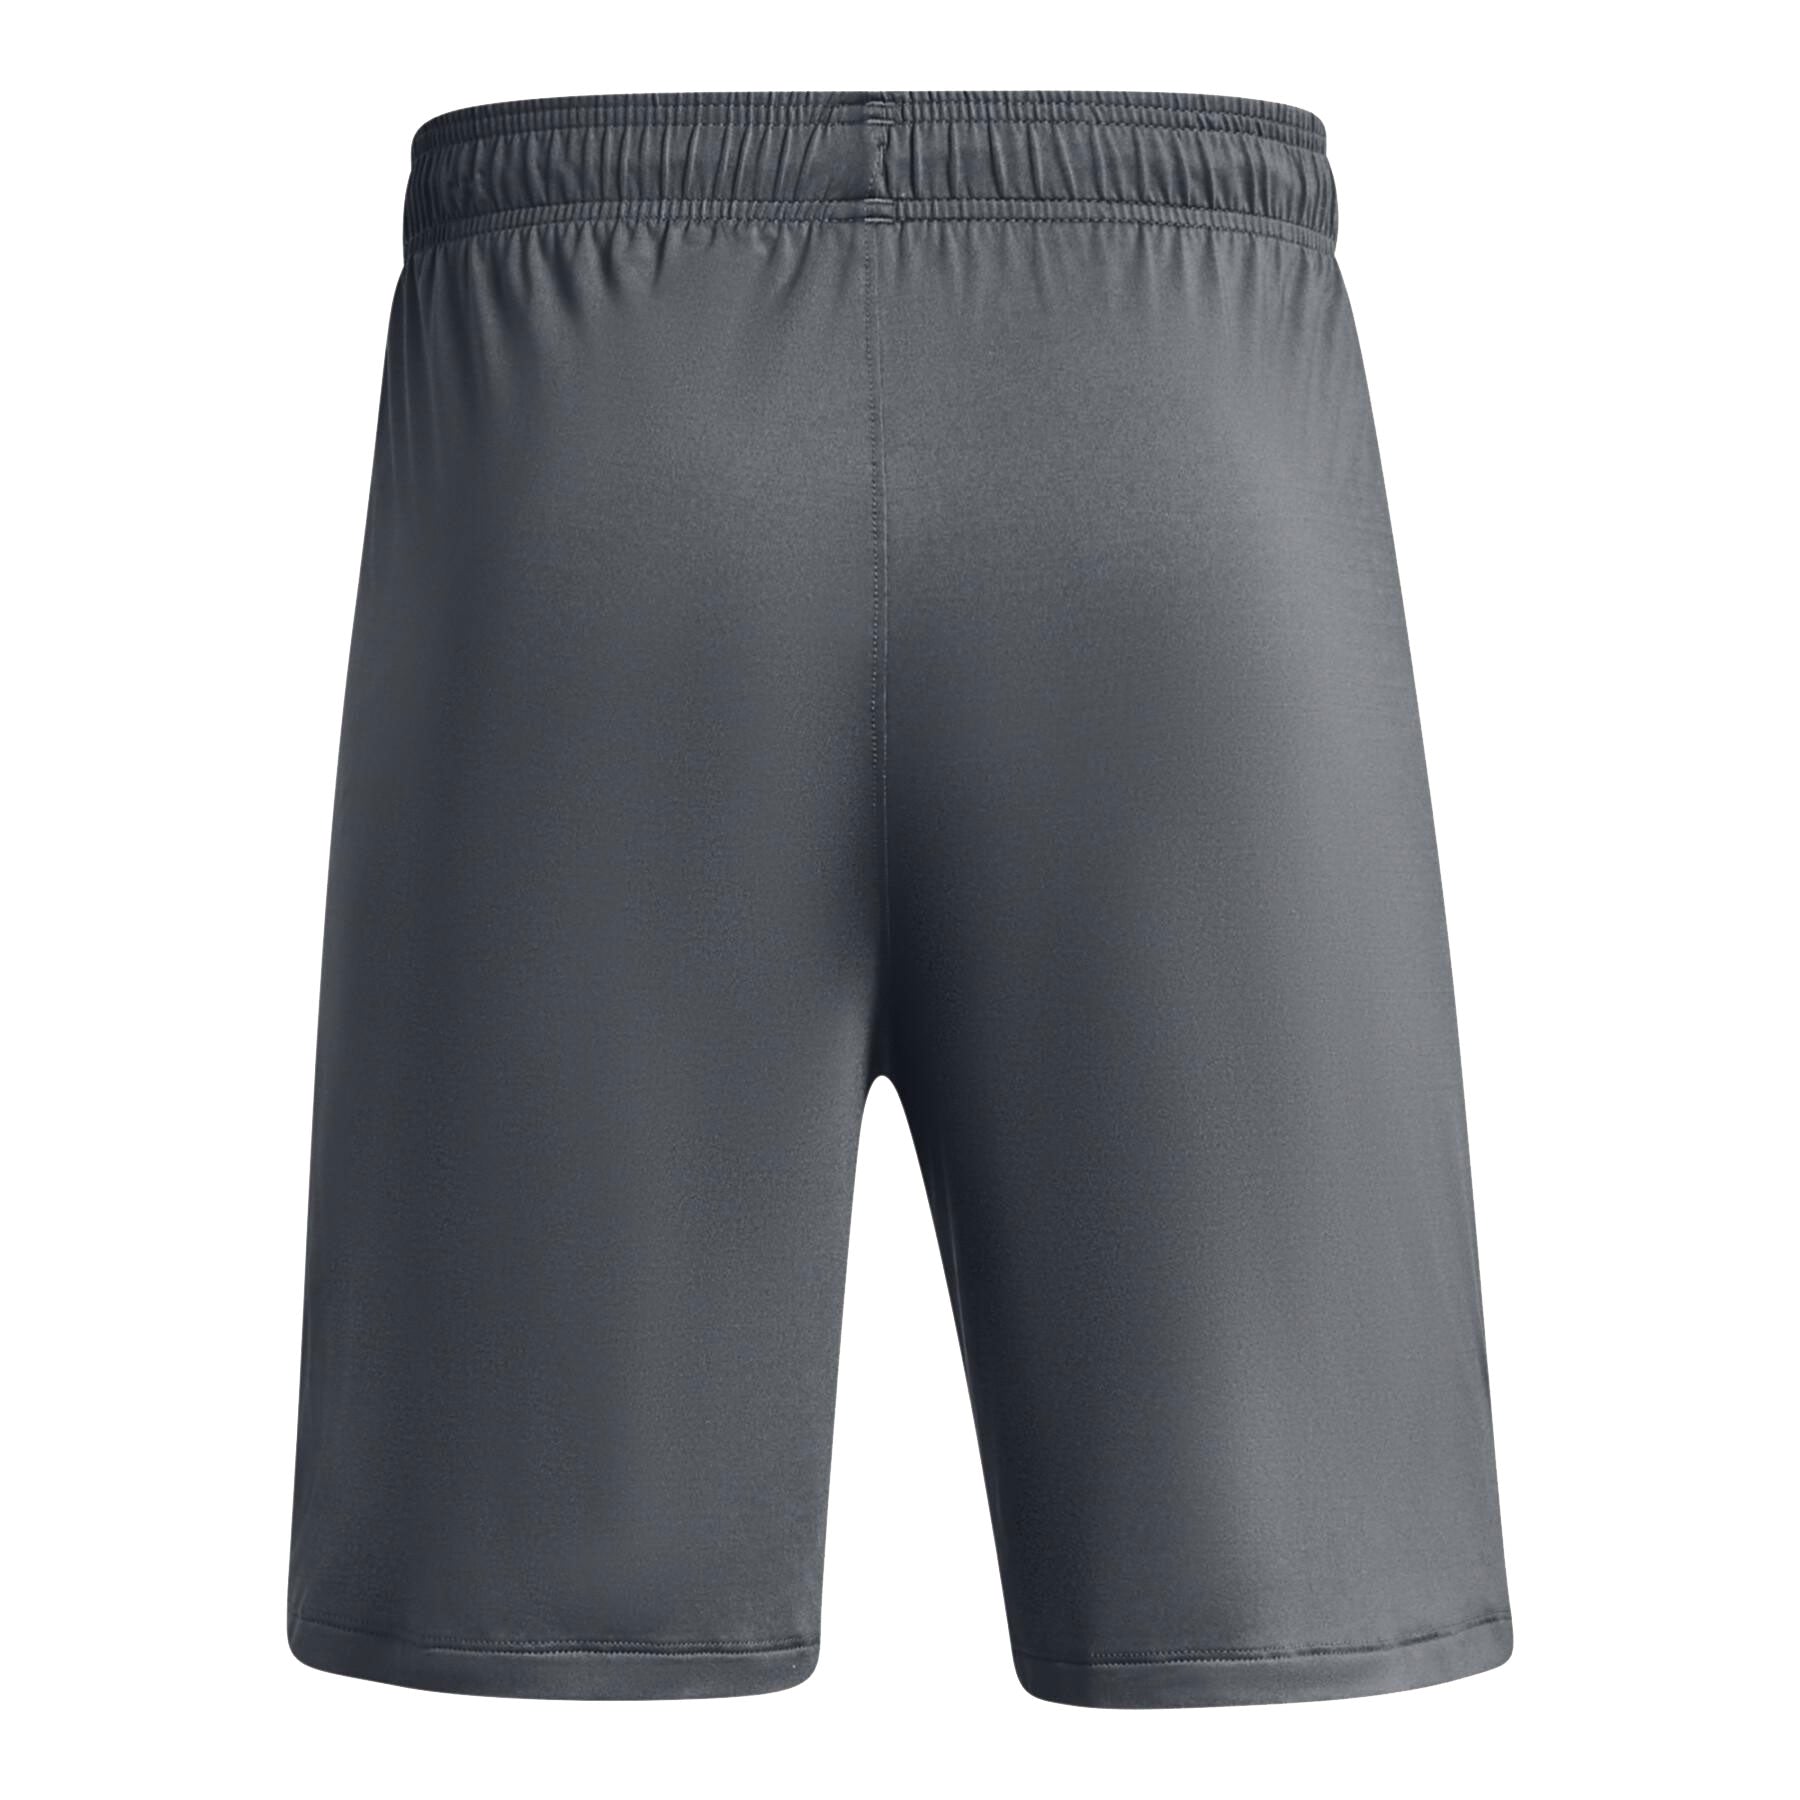 Under Armour Tech Vent Shorts - Mens - Pitch Grey/Black